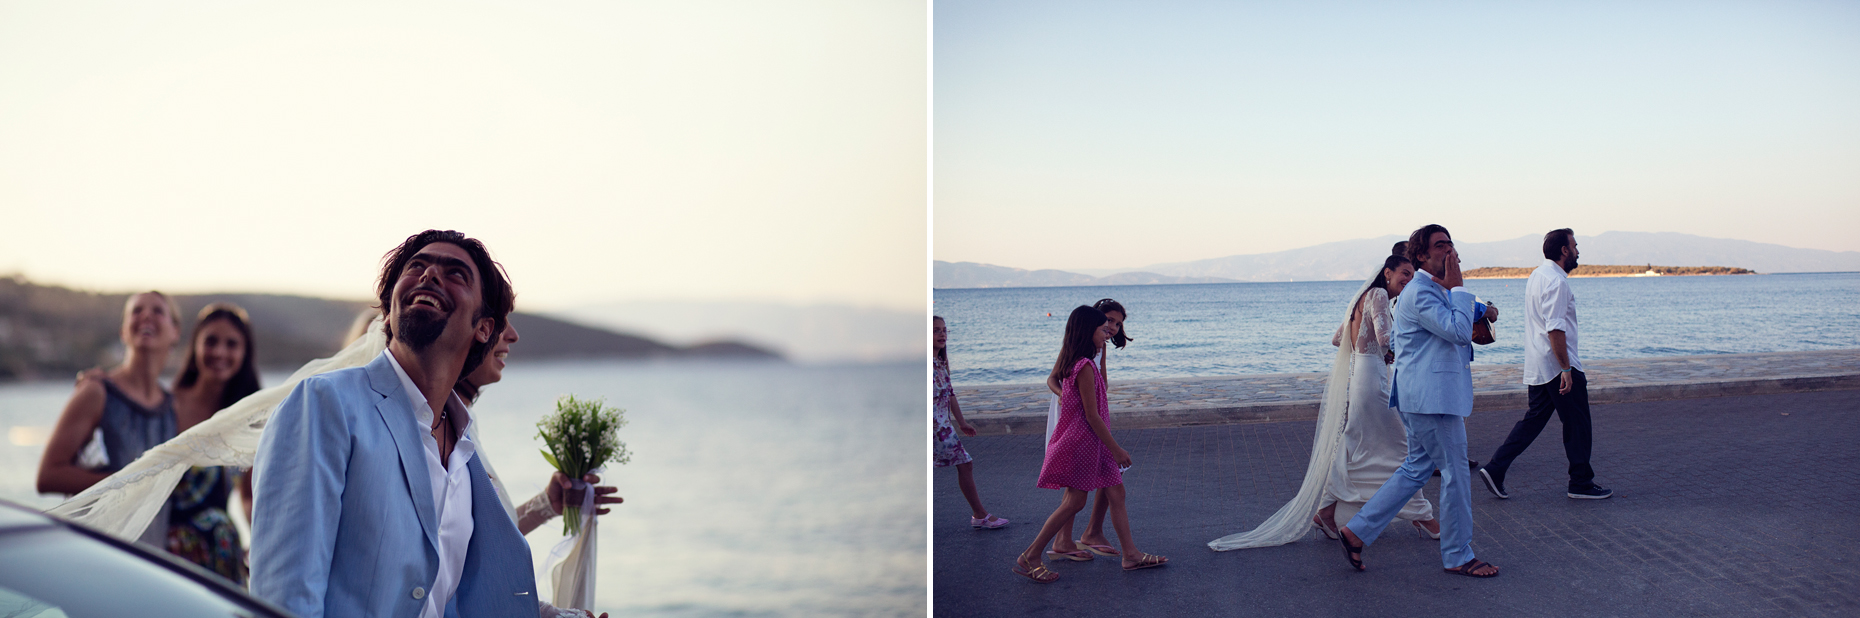 Destination Wedding Photography_Greece_JamiSaunders_030